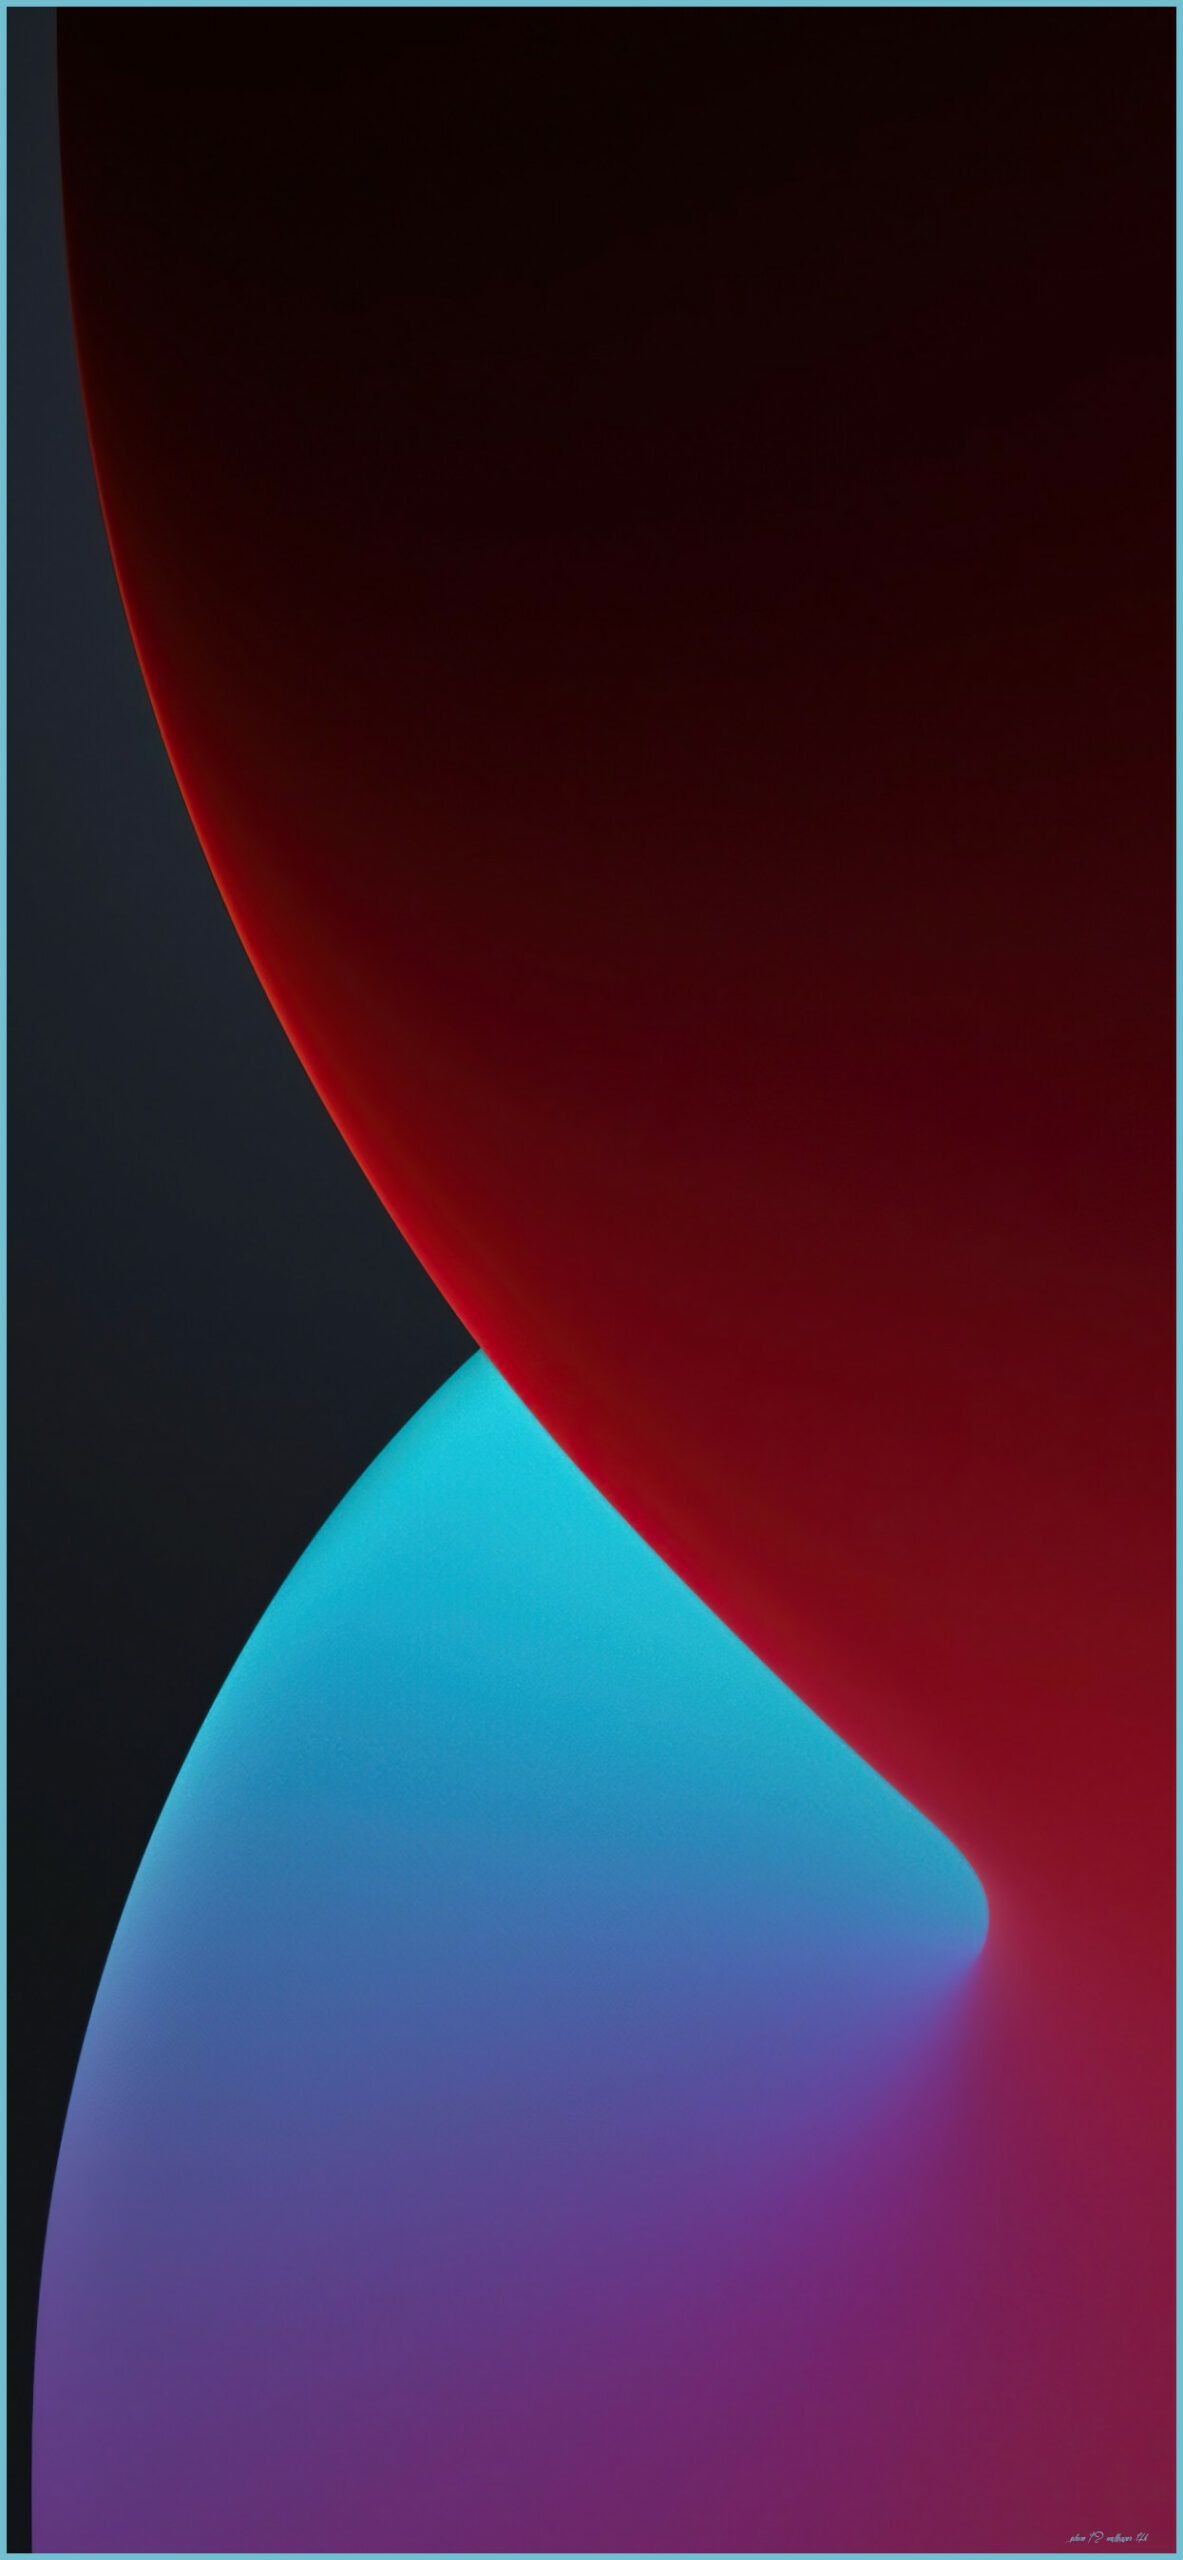 IOS 10 10K Wallpaper, WWDC, IPhone IPadOS, Dark, Red 12 Wallpaper 4k